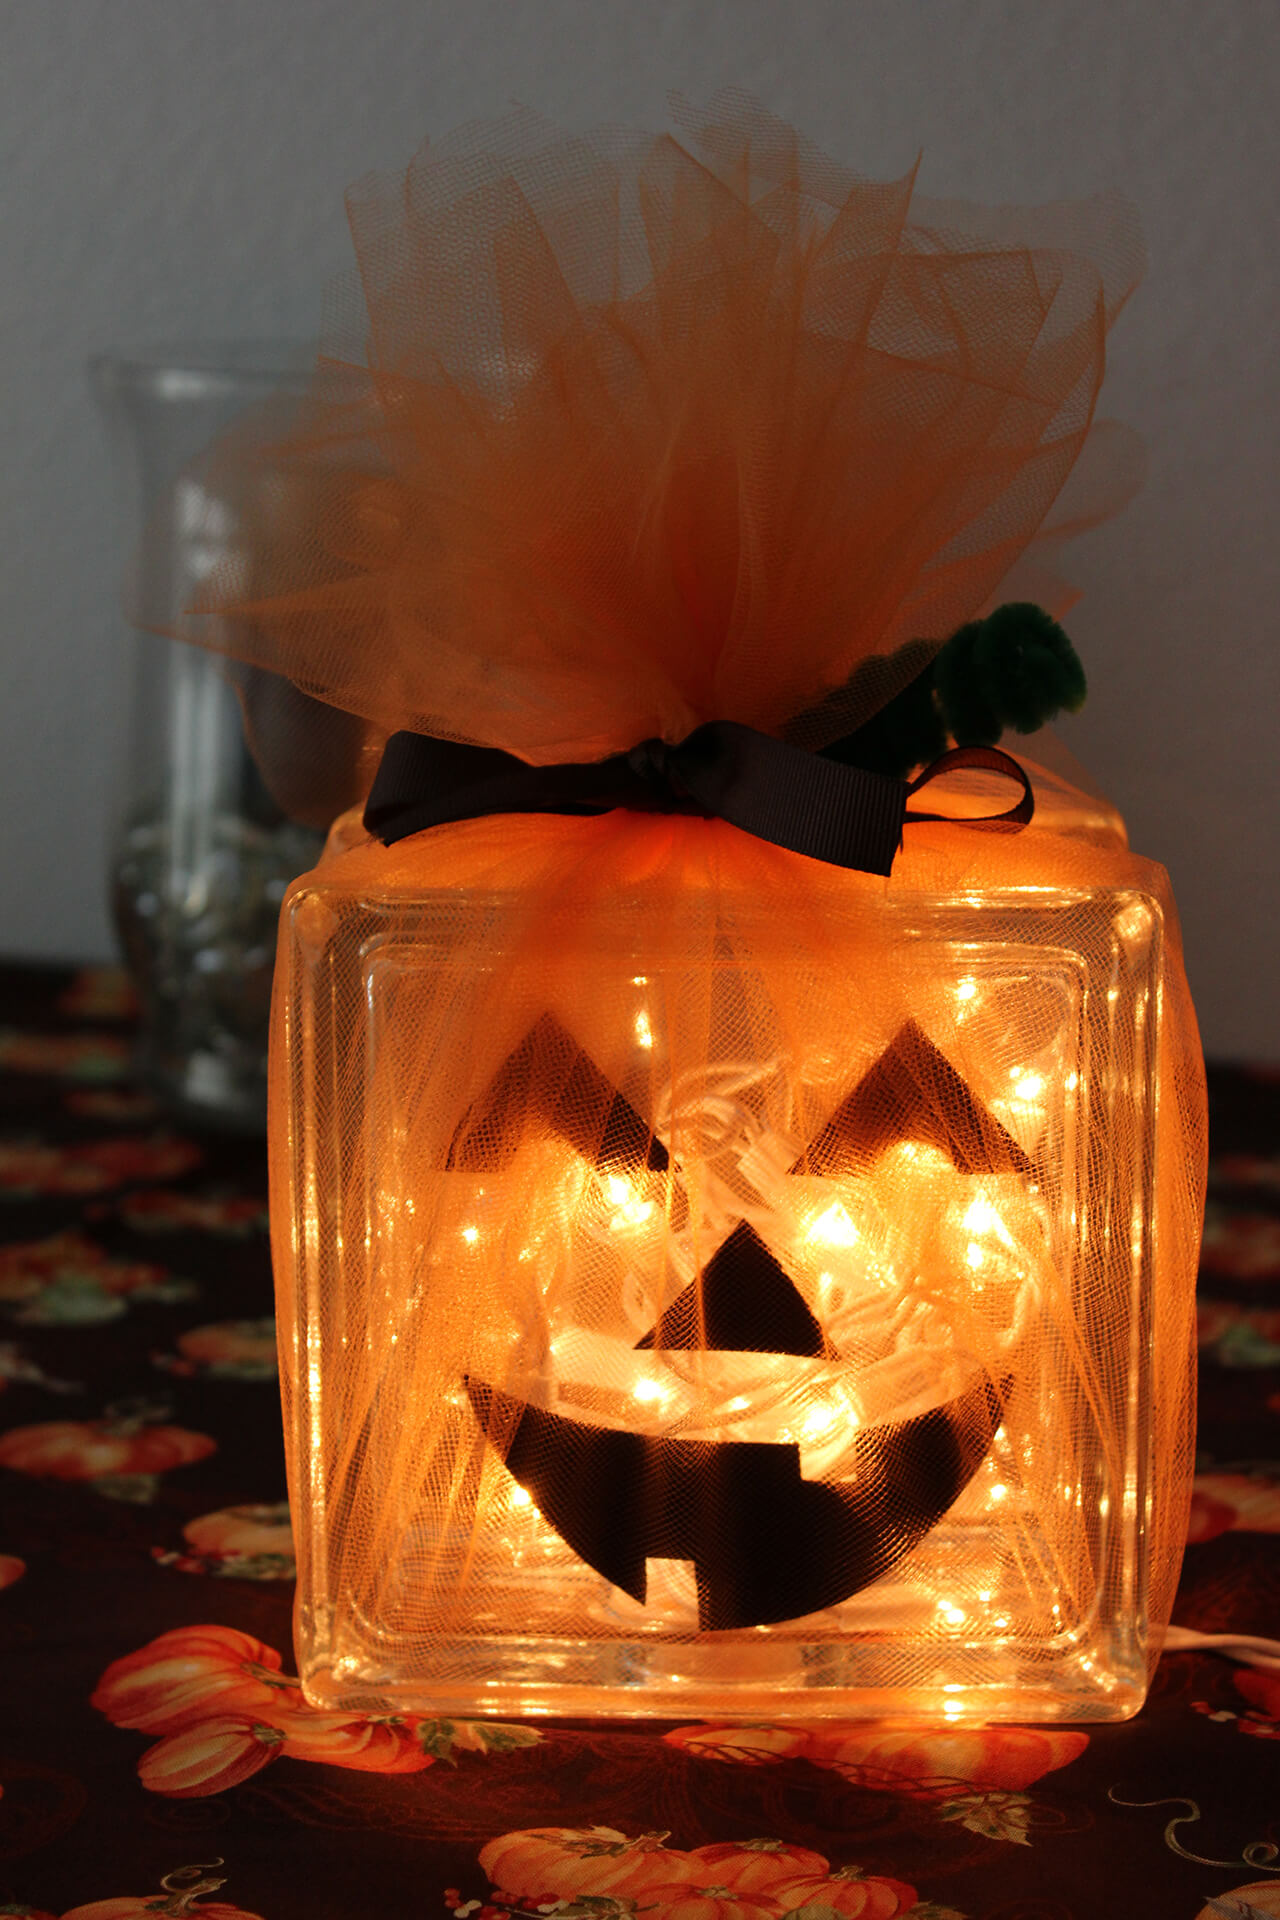 Glass Pumpkins Still Shine Bright | DIY Indoor Halloween Decorating Ideas